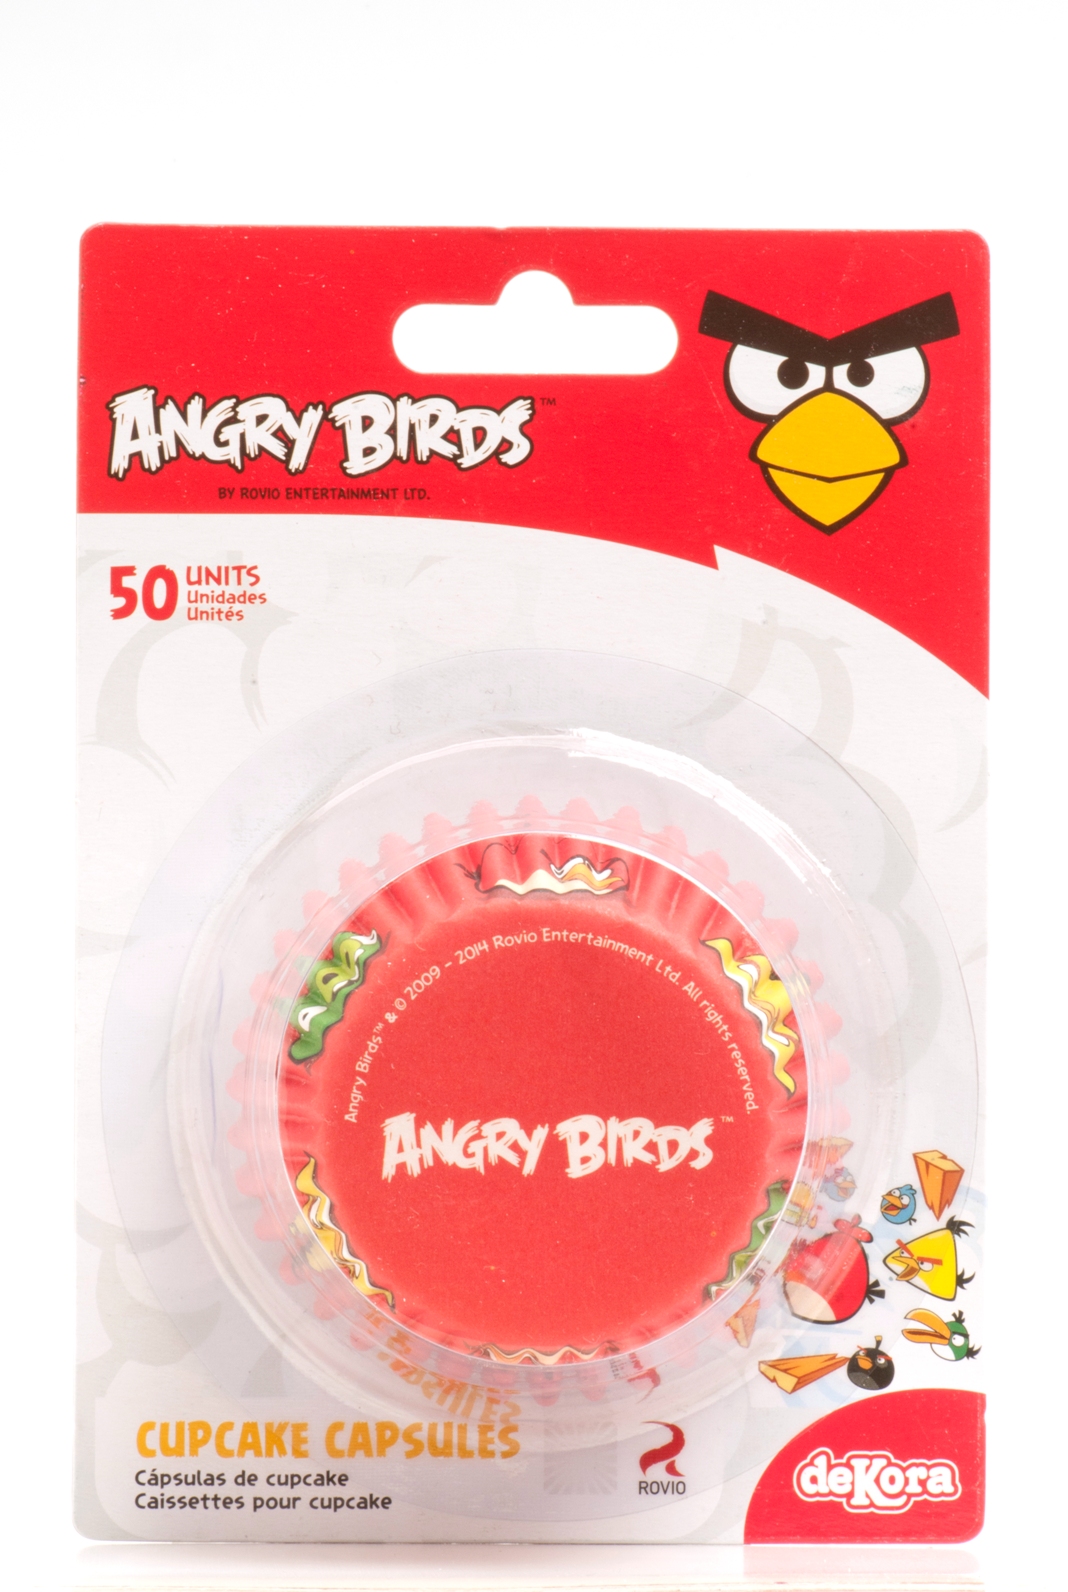 Angry Birds cupcake Capsules